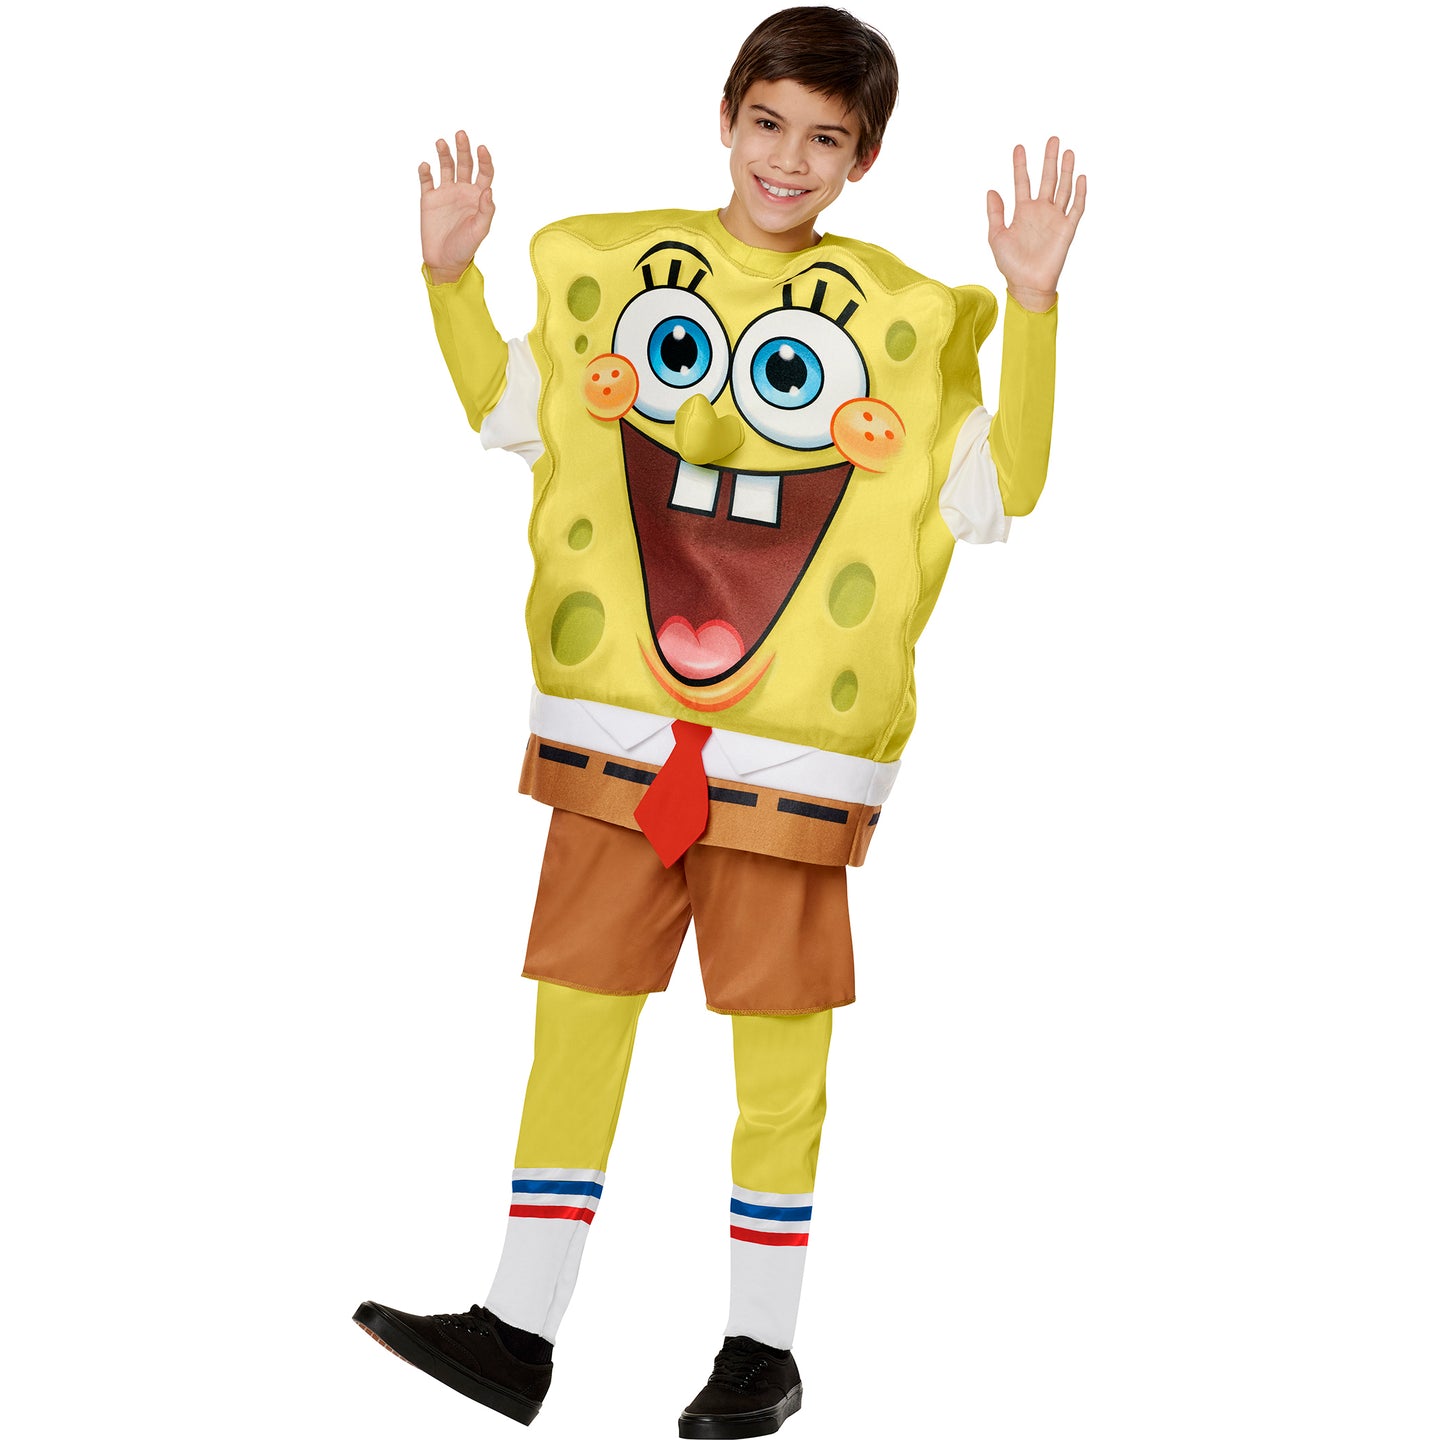 InSpirit Designs Kids SpongeBob SquarePants Costume